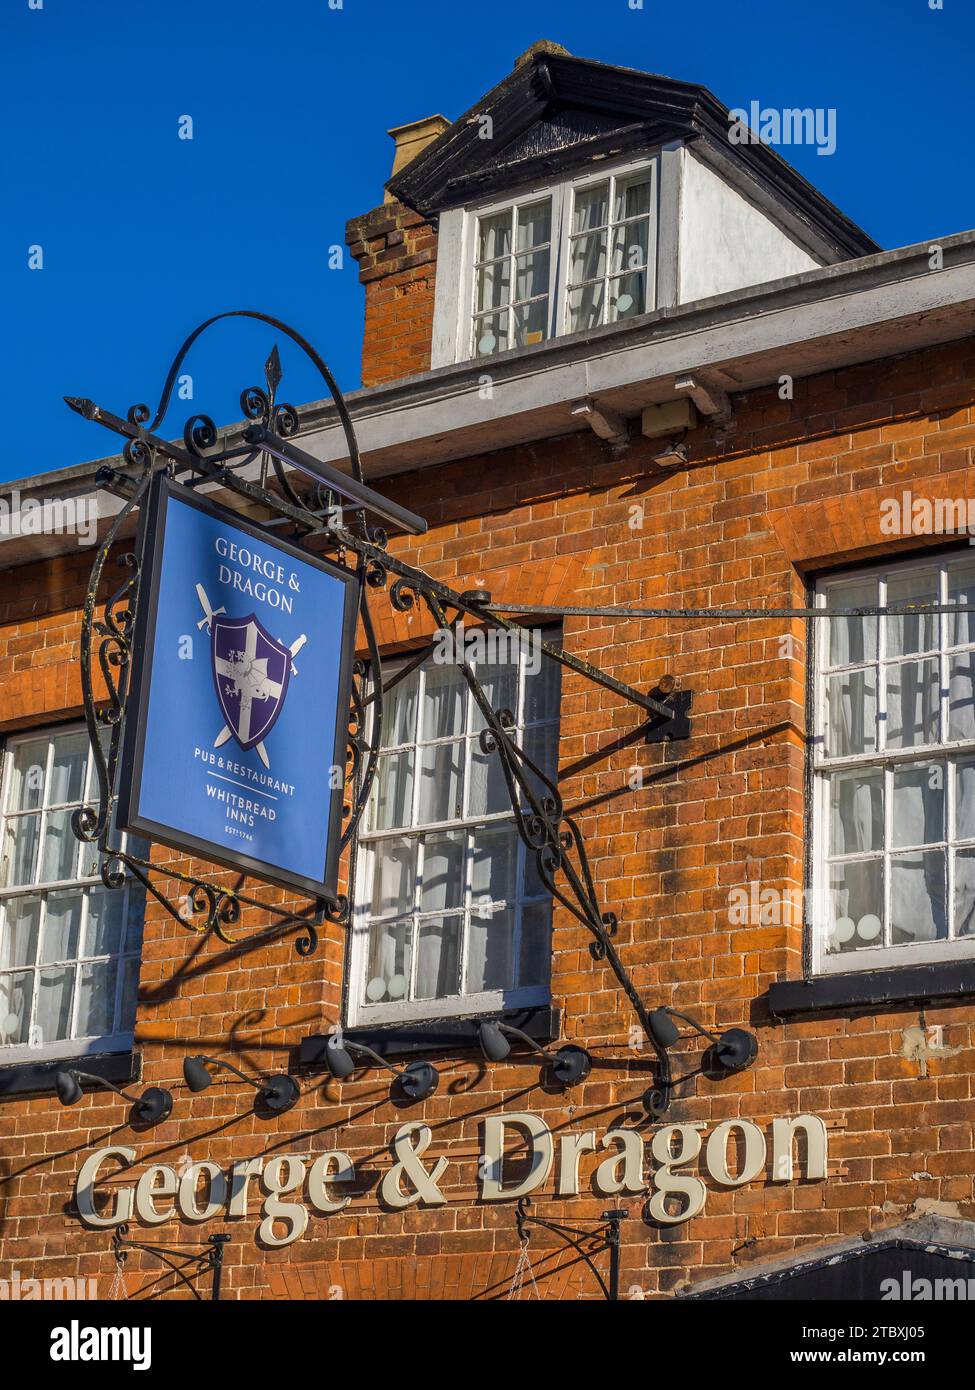 George and the Dragon Pub, Marlow, Buckinghamshire, England, UK, GB. Stock Photo